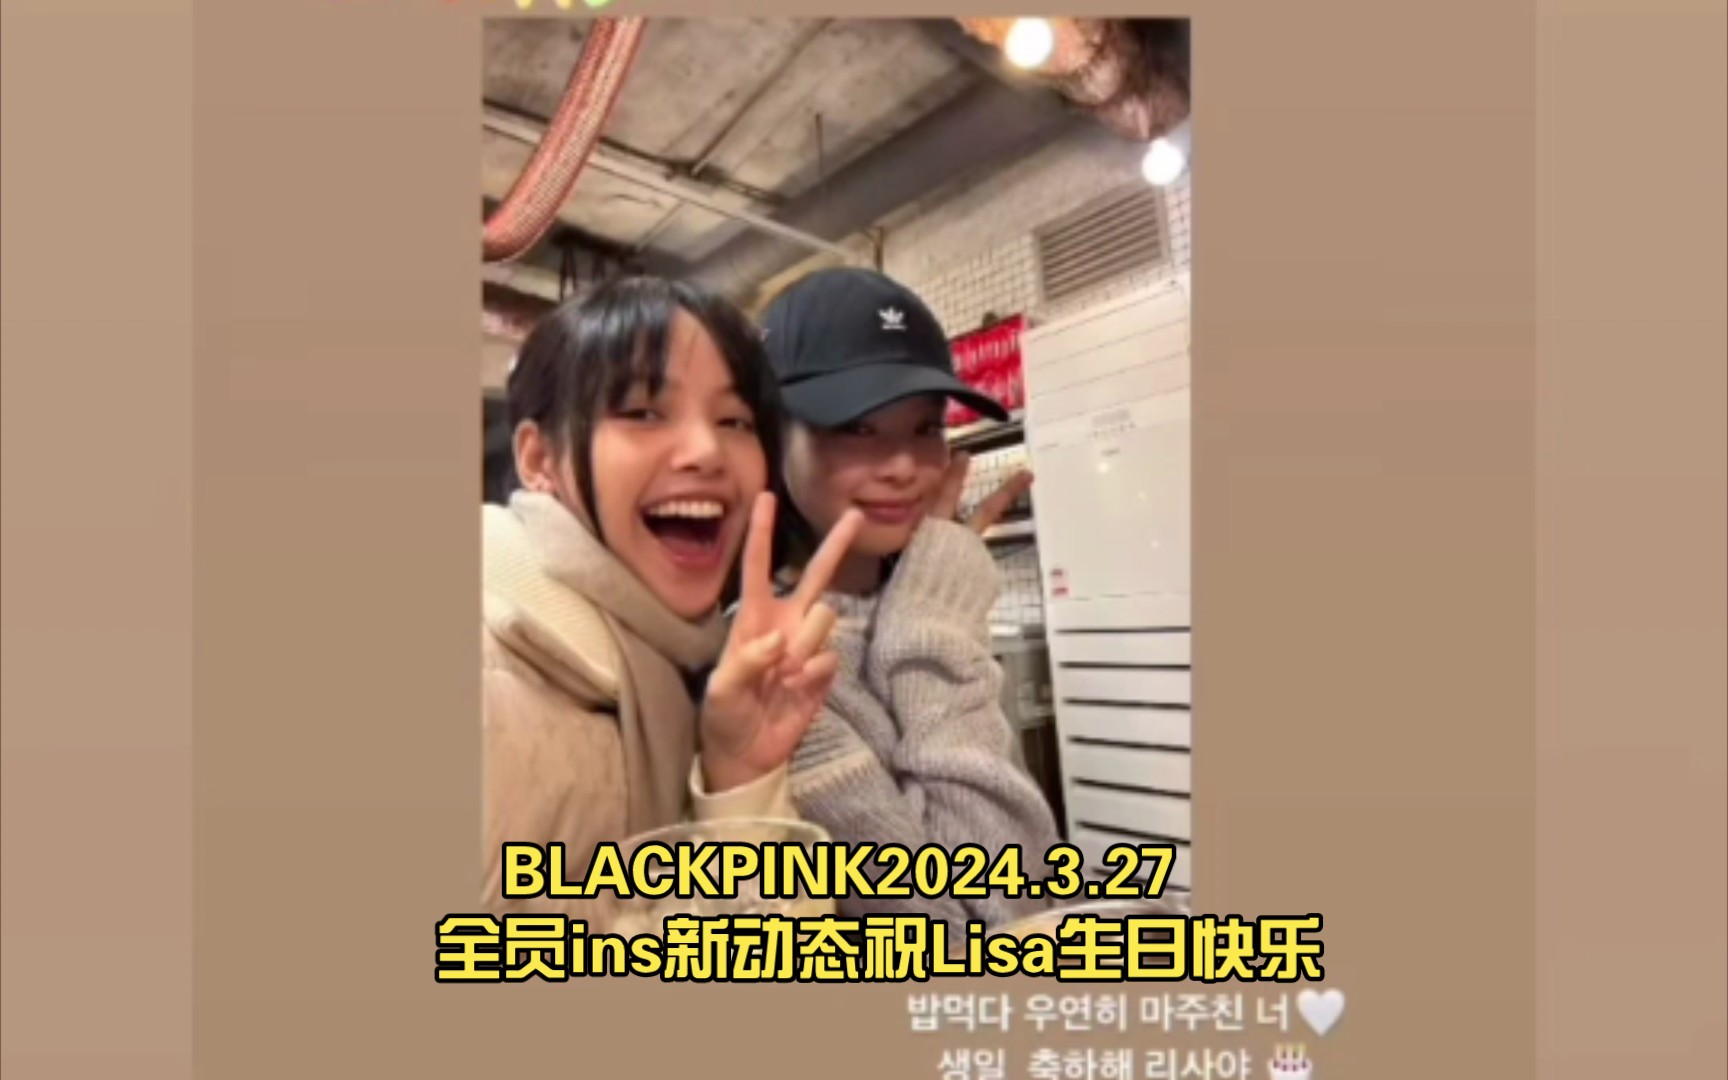 BLACKPINK2024.3.27全员ins新动态祝Lisa生日快乐